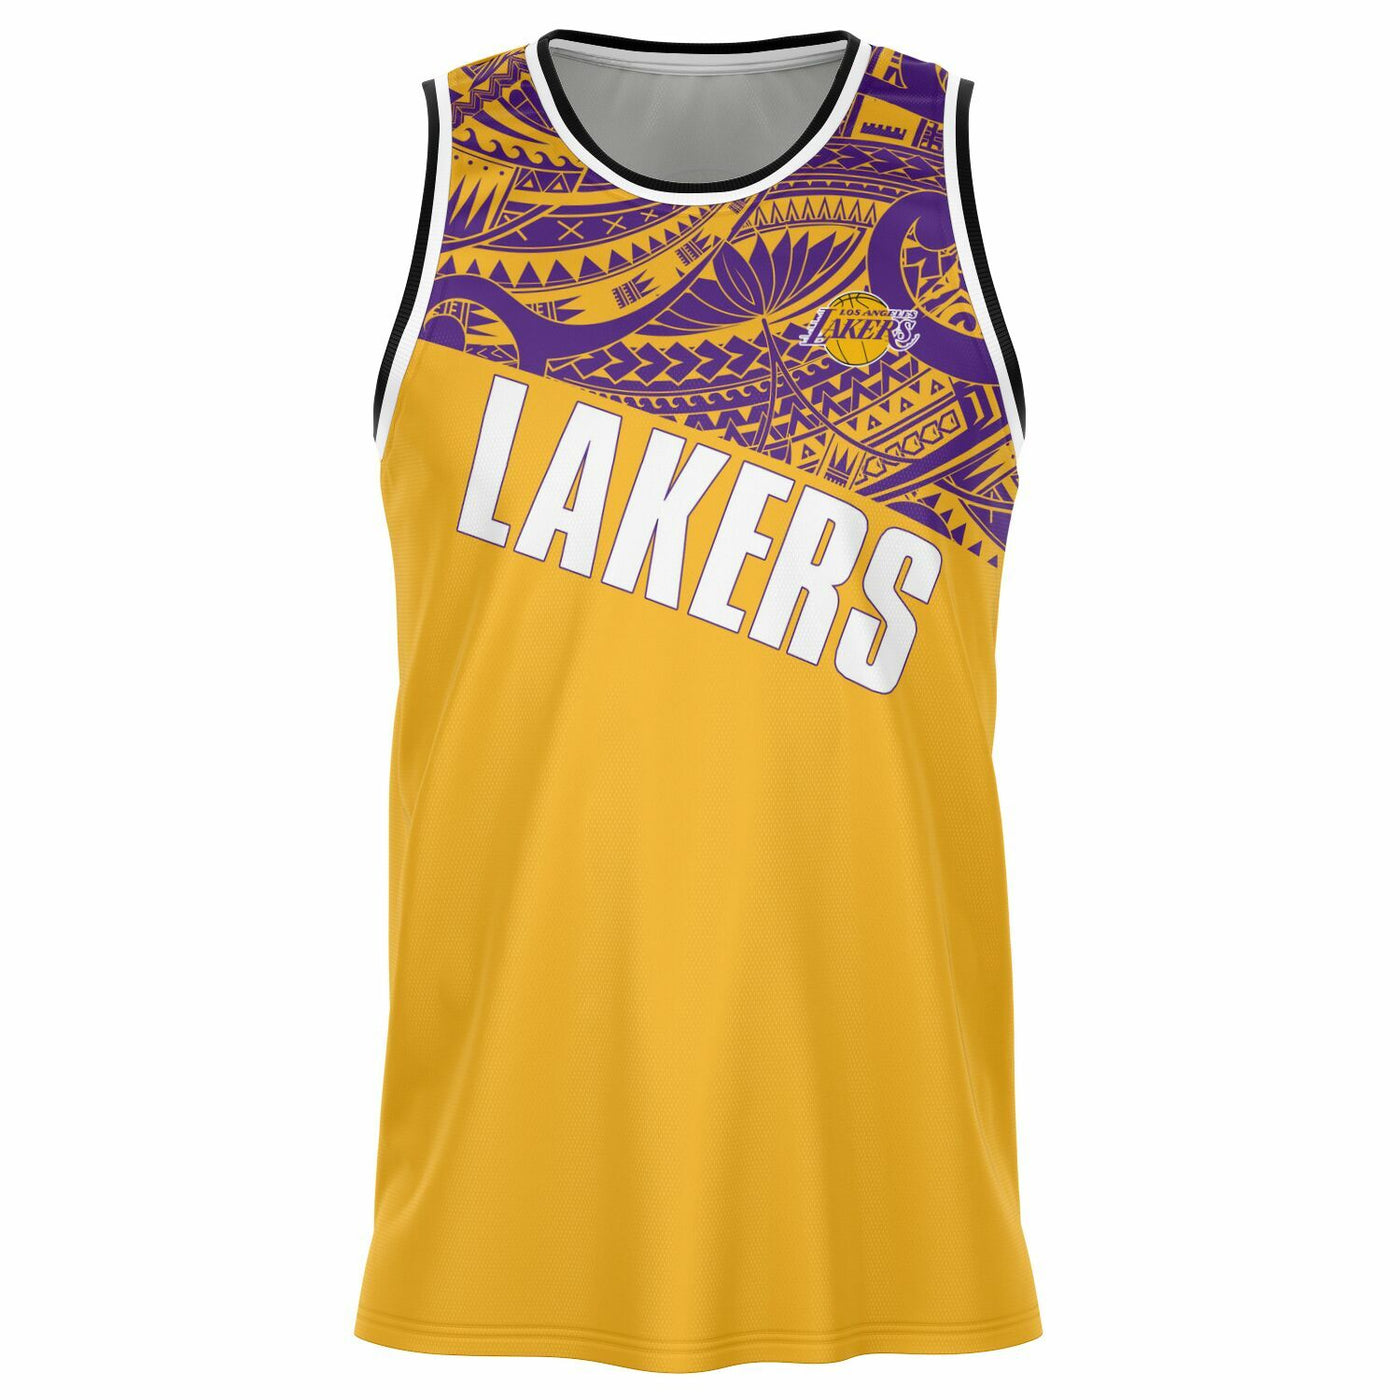 Los Angeles Lakers Jerseys, Lakers Basketball Jerseys